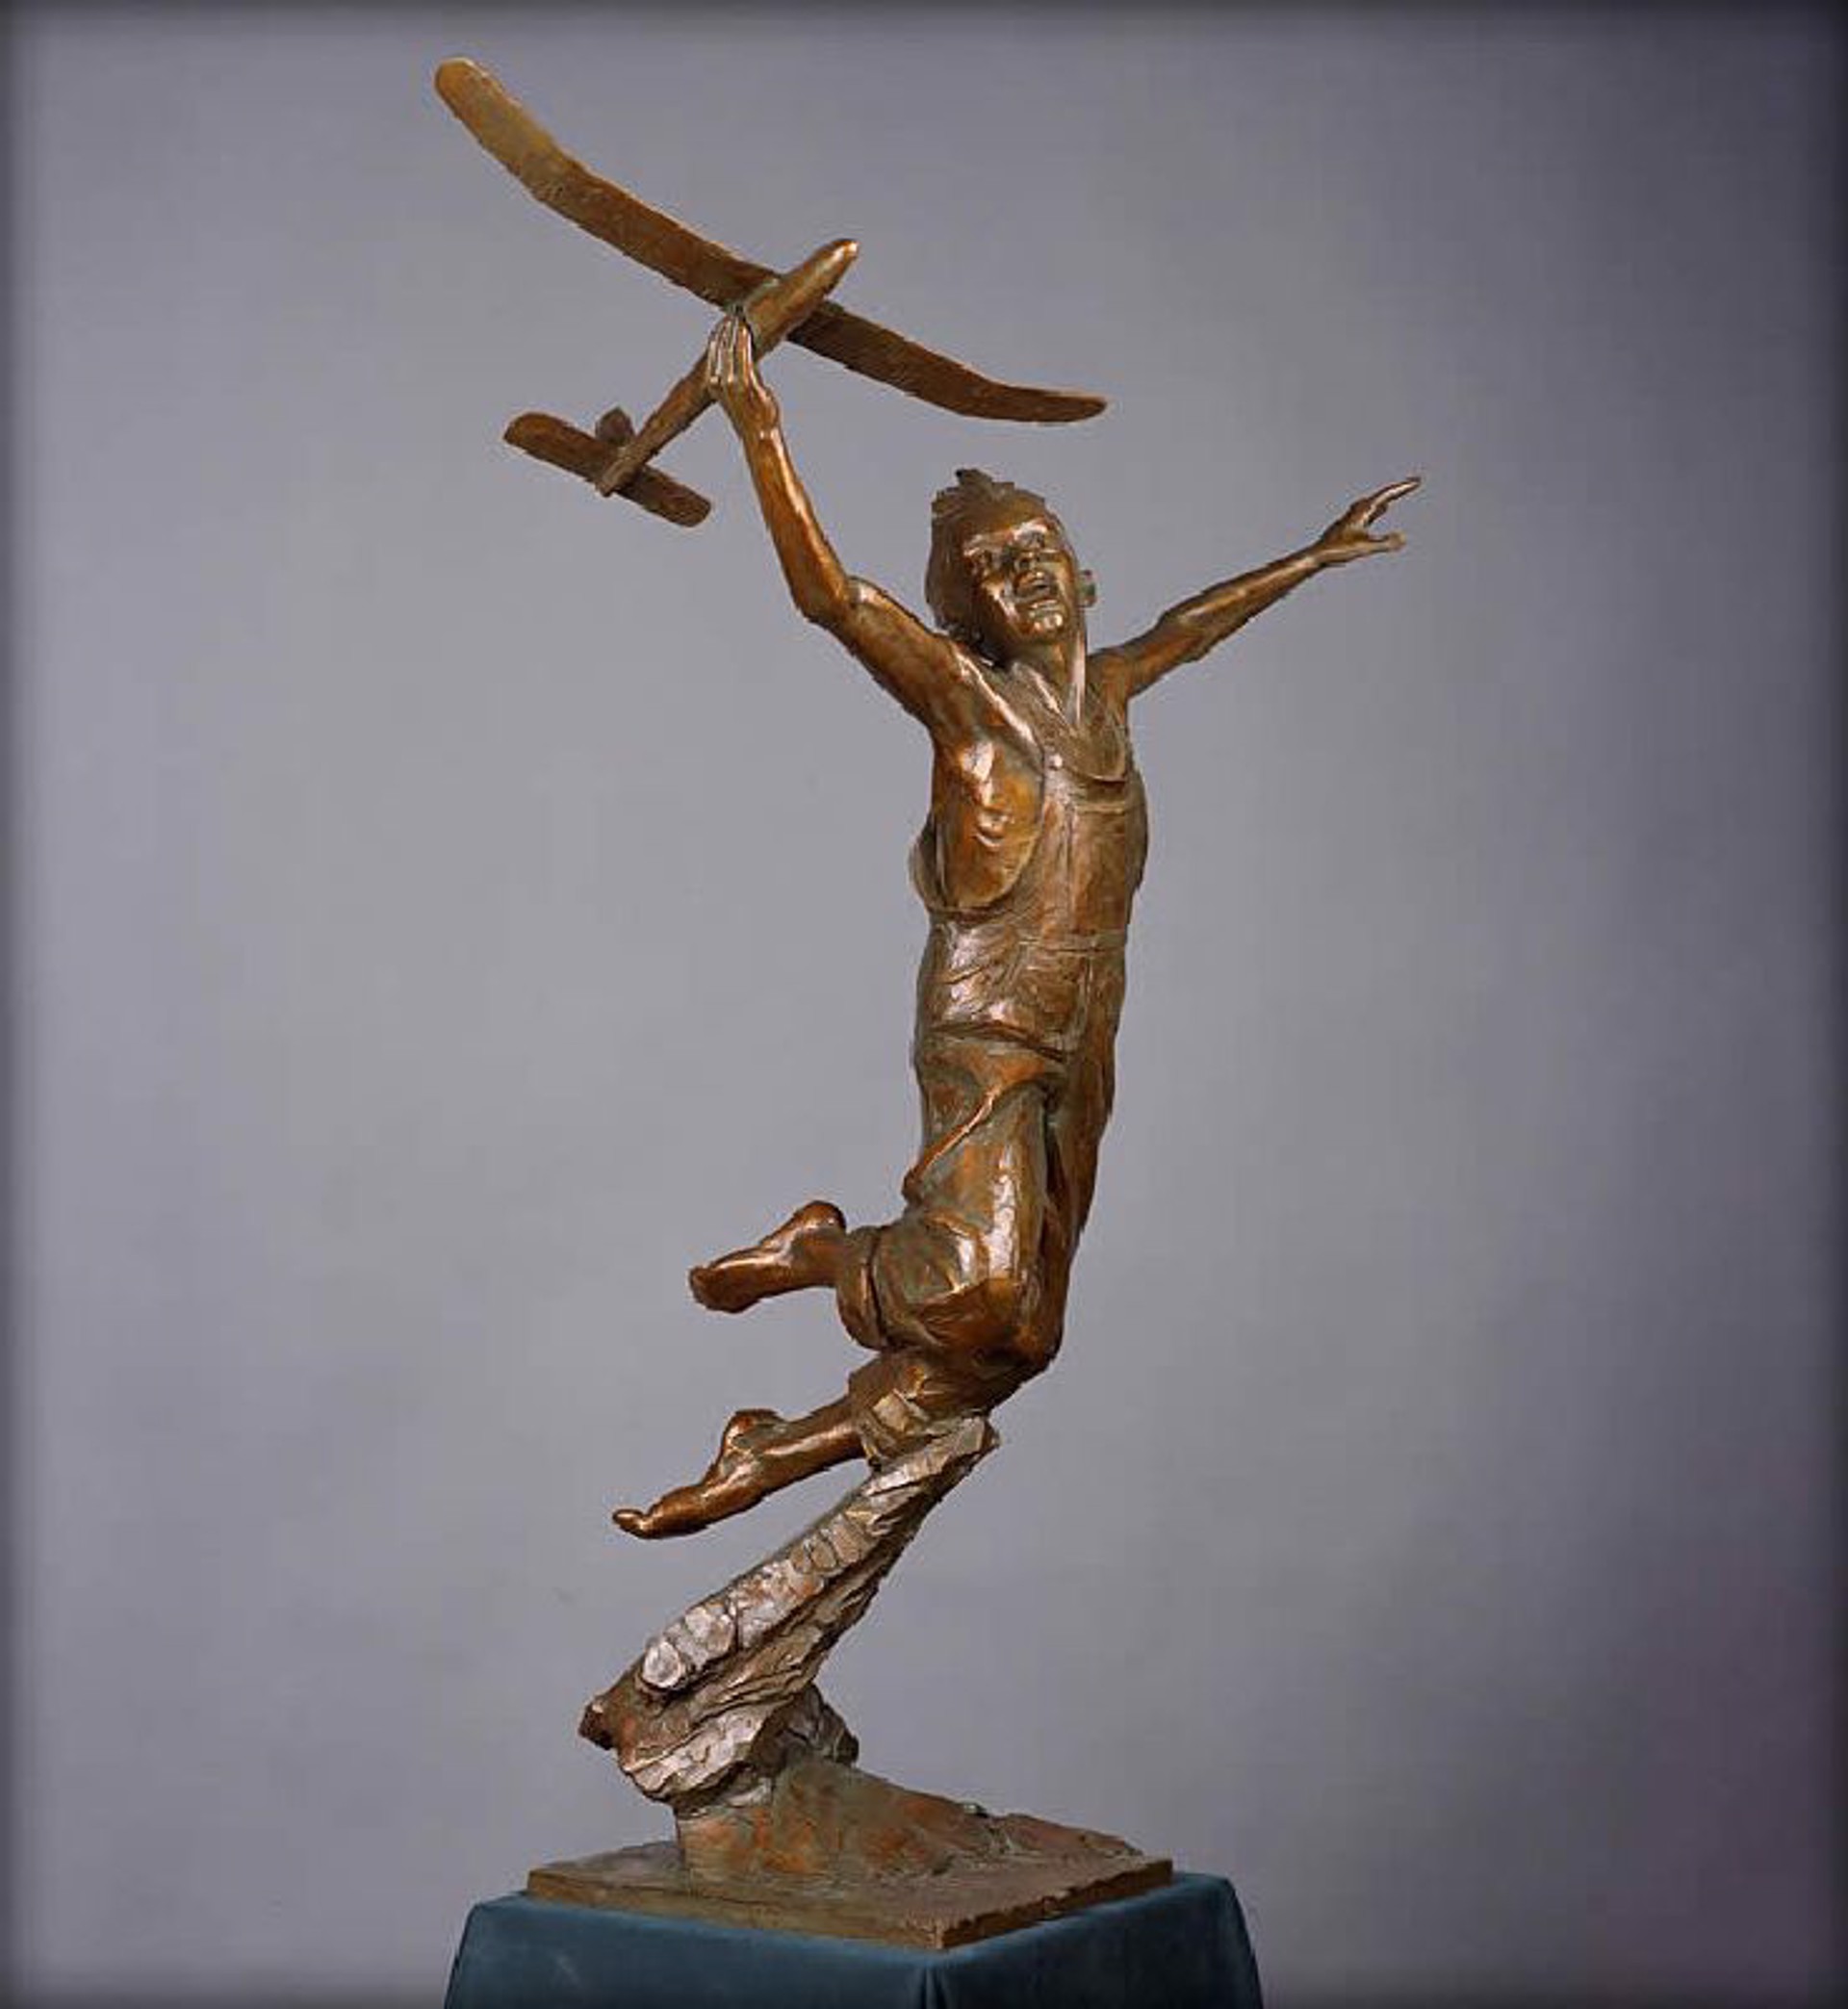 Wings by Gary Lee Price (sculptor)